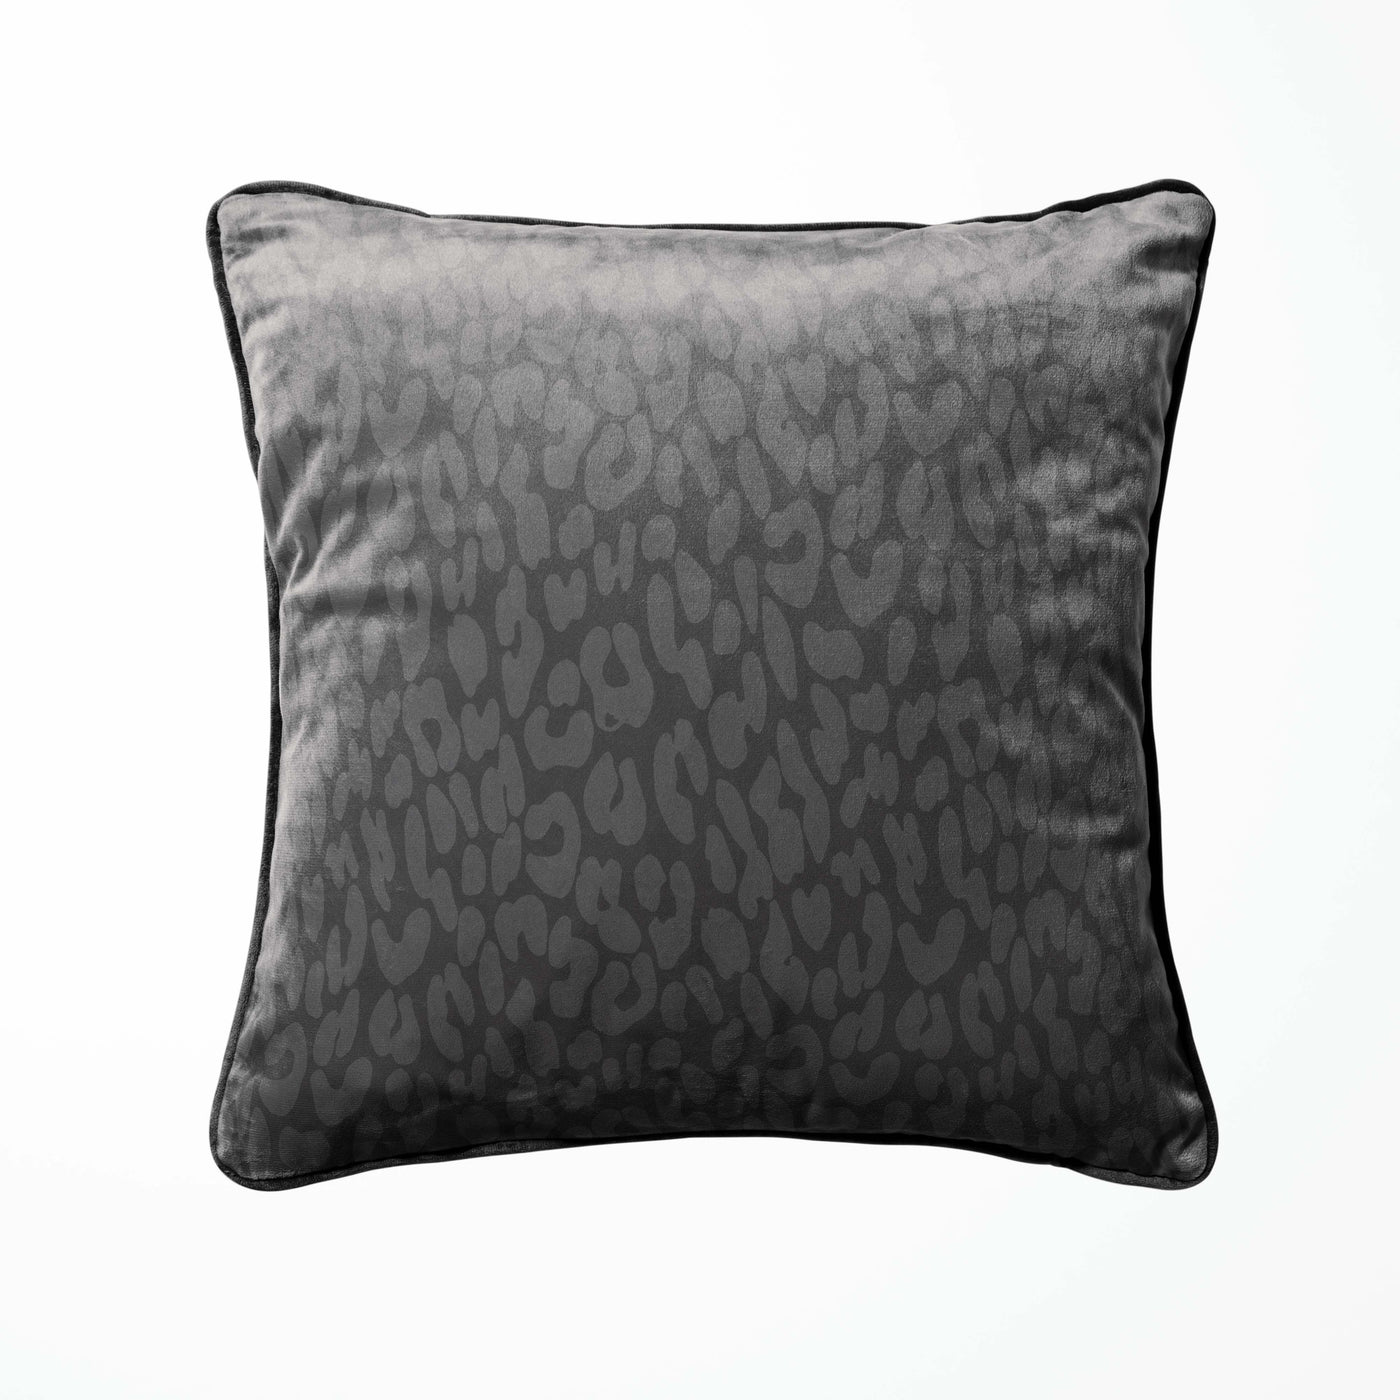 Vintage Savanna Velvet Cushion in Graphite Grey with Black Piping